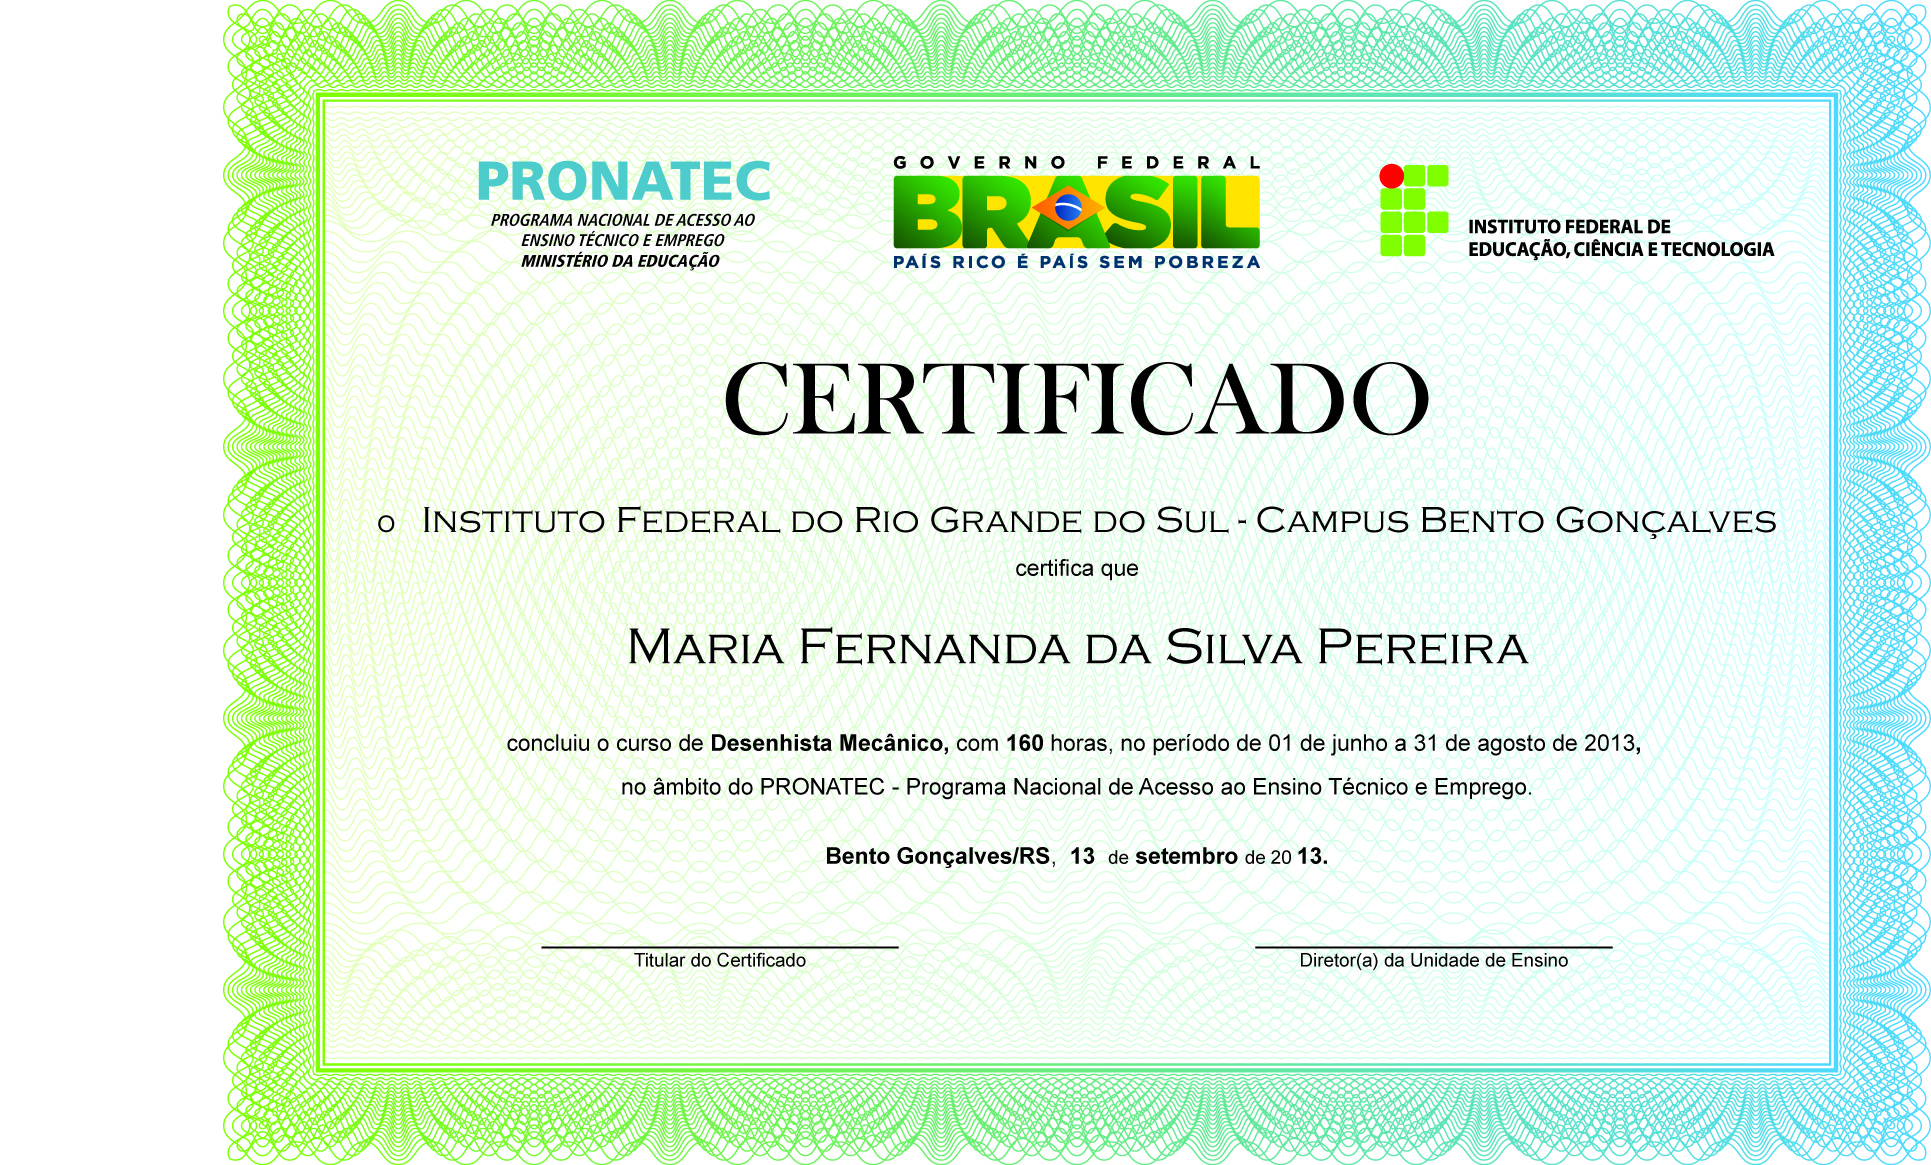 Certificado Pronatec - Exemplo.jpg